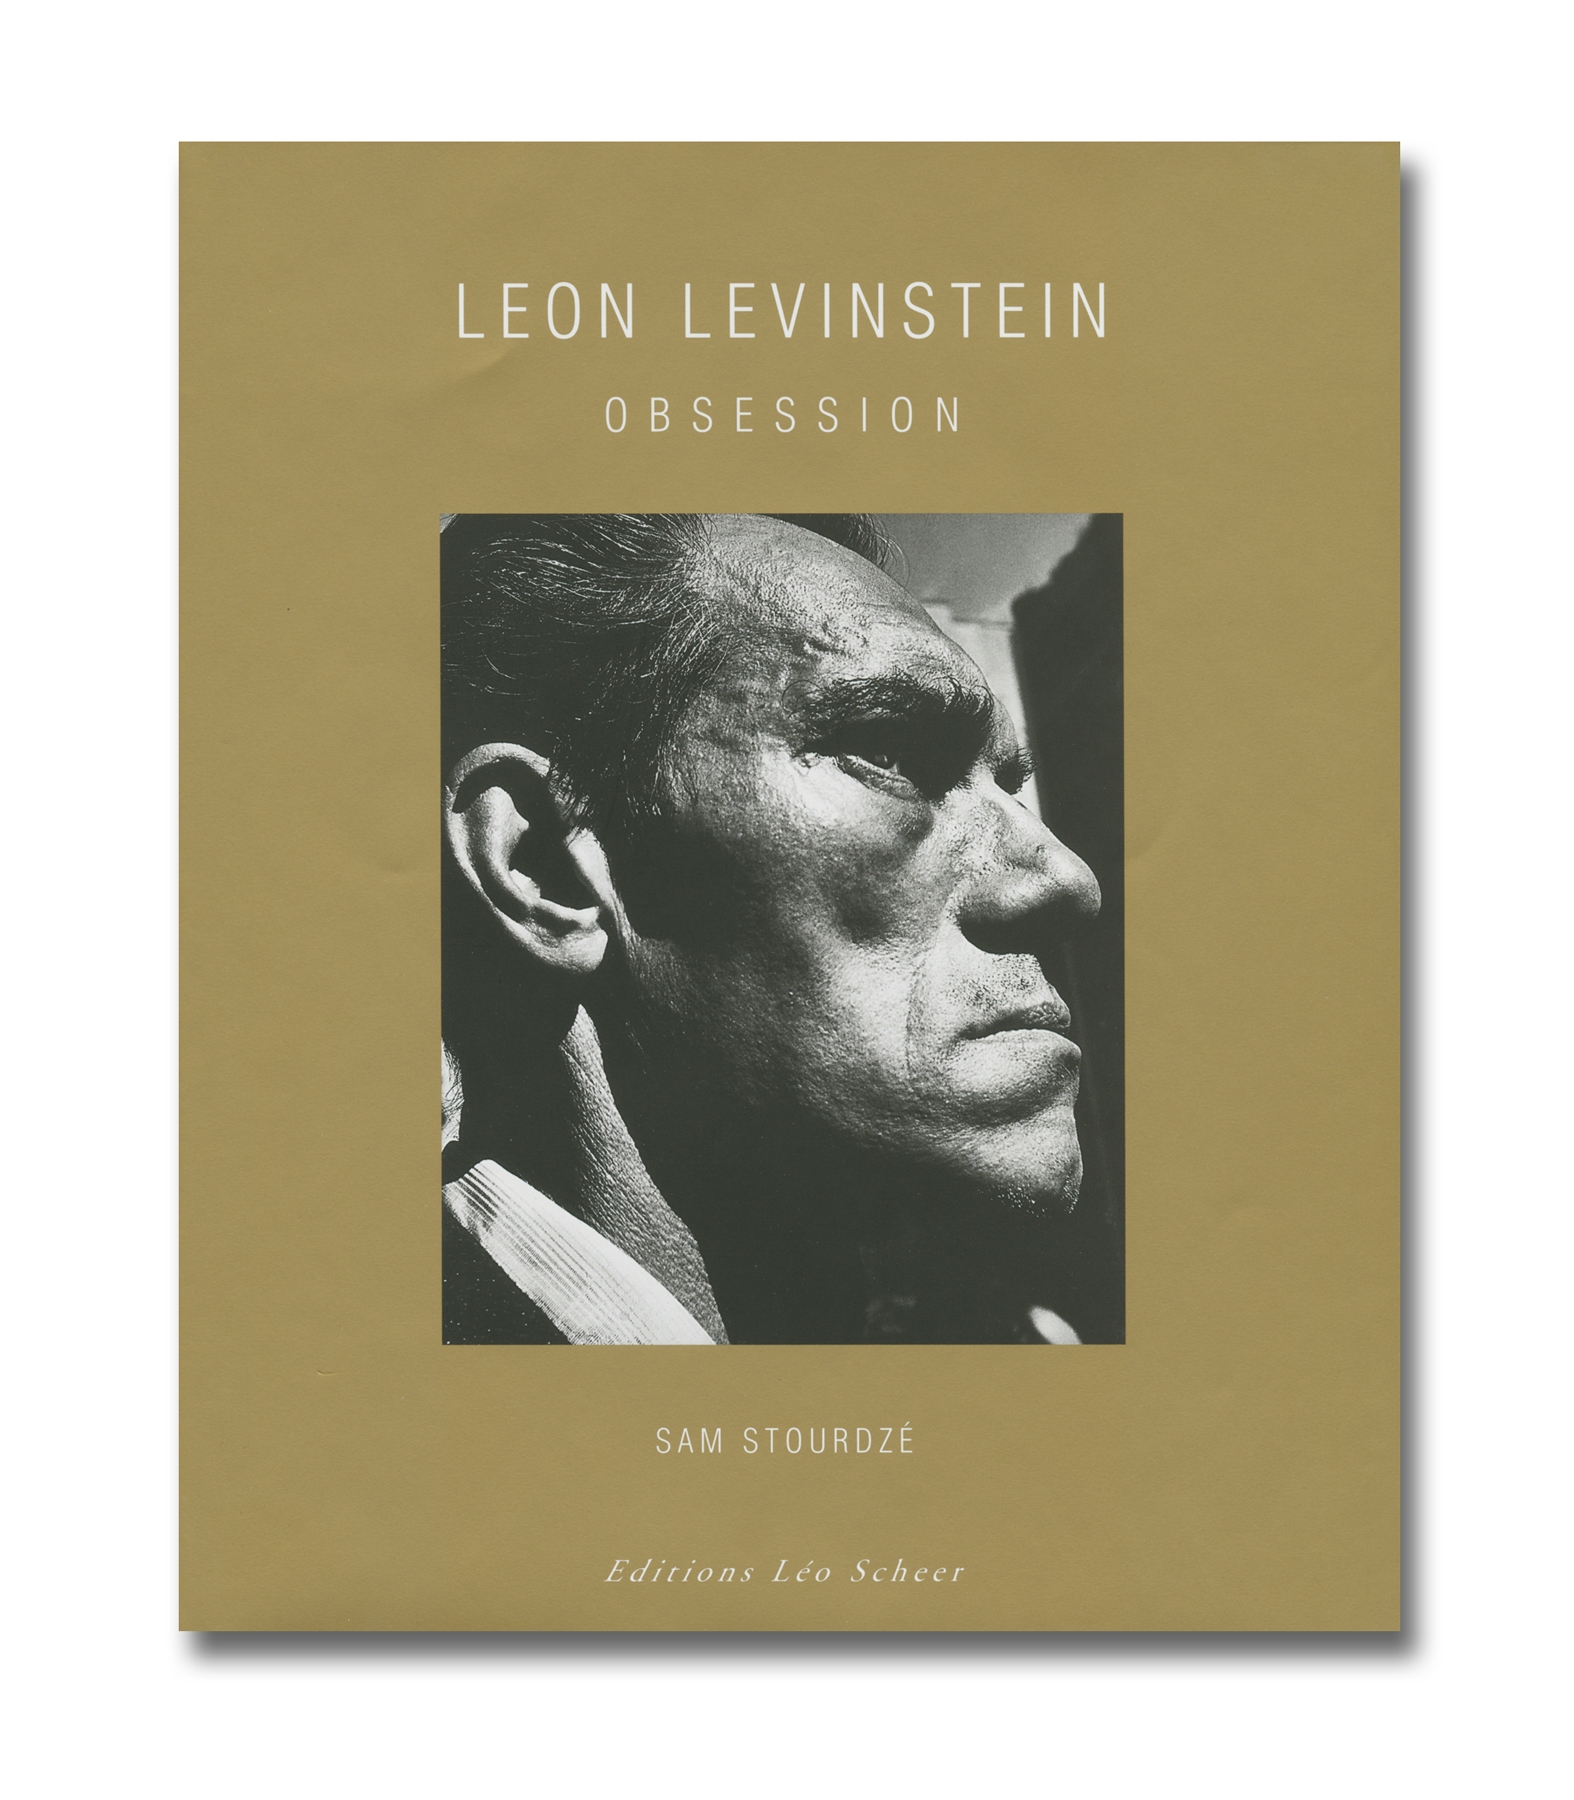 Leon Levinstein - Obsession - Editions Leo Scheer - 2000